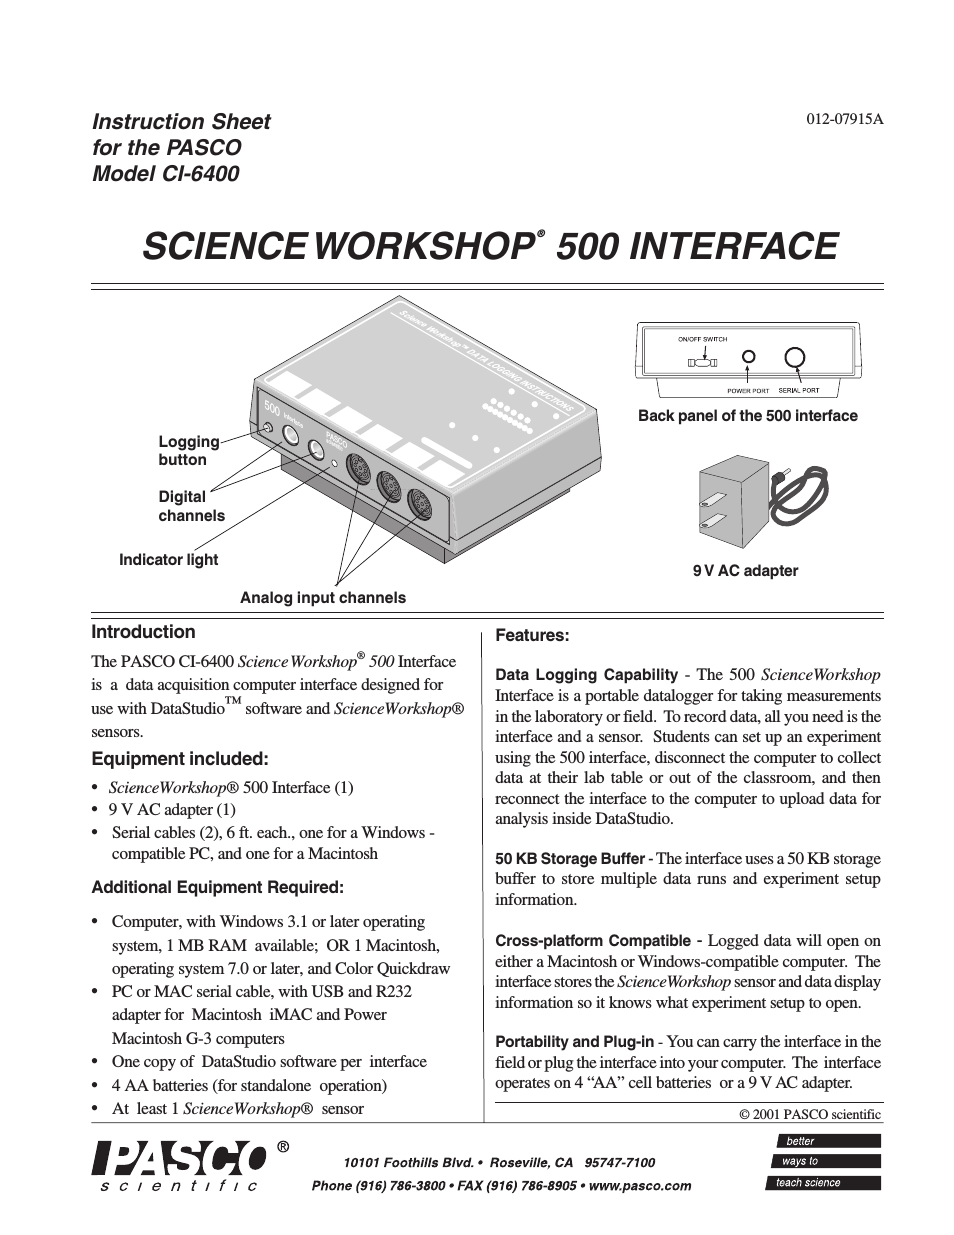 CI-6400 SCIENCEWORKSHOP 500 INTERFACE